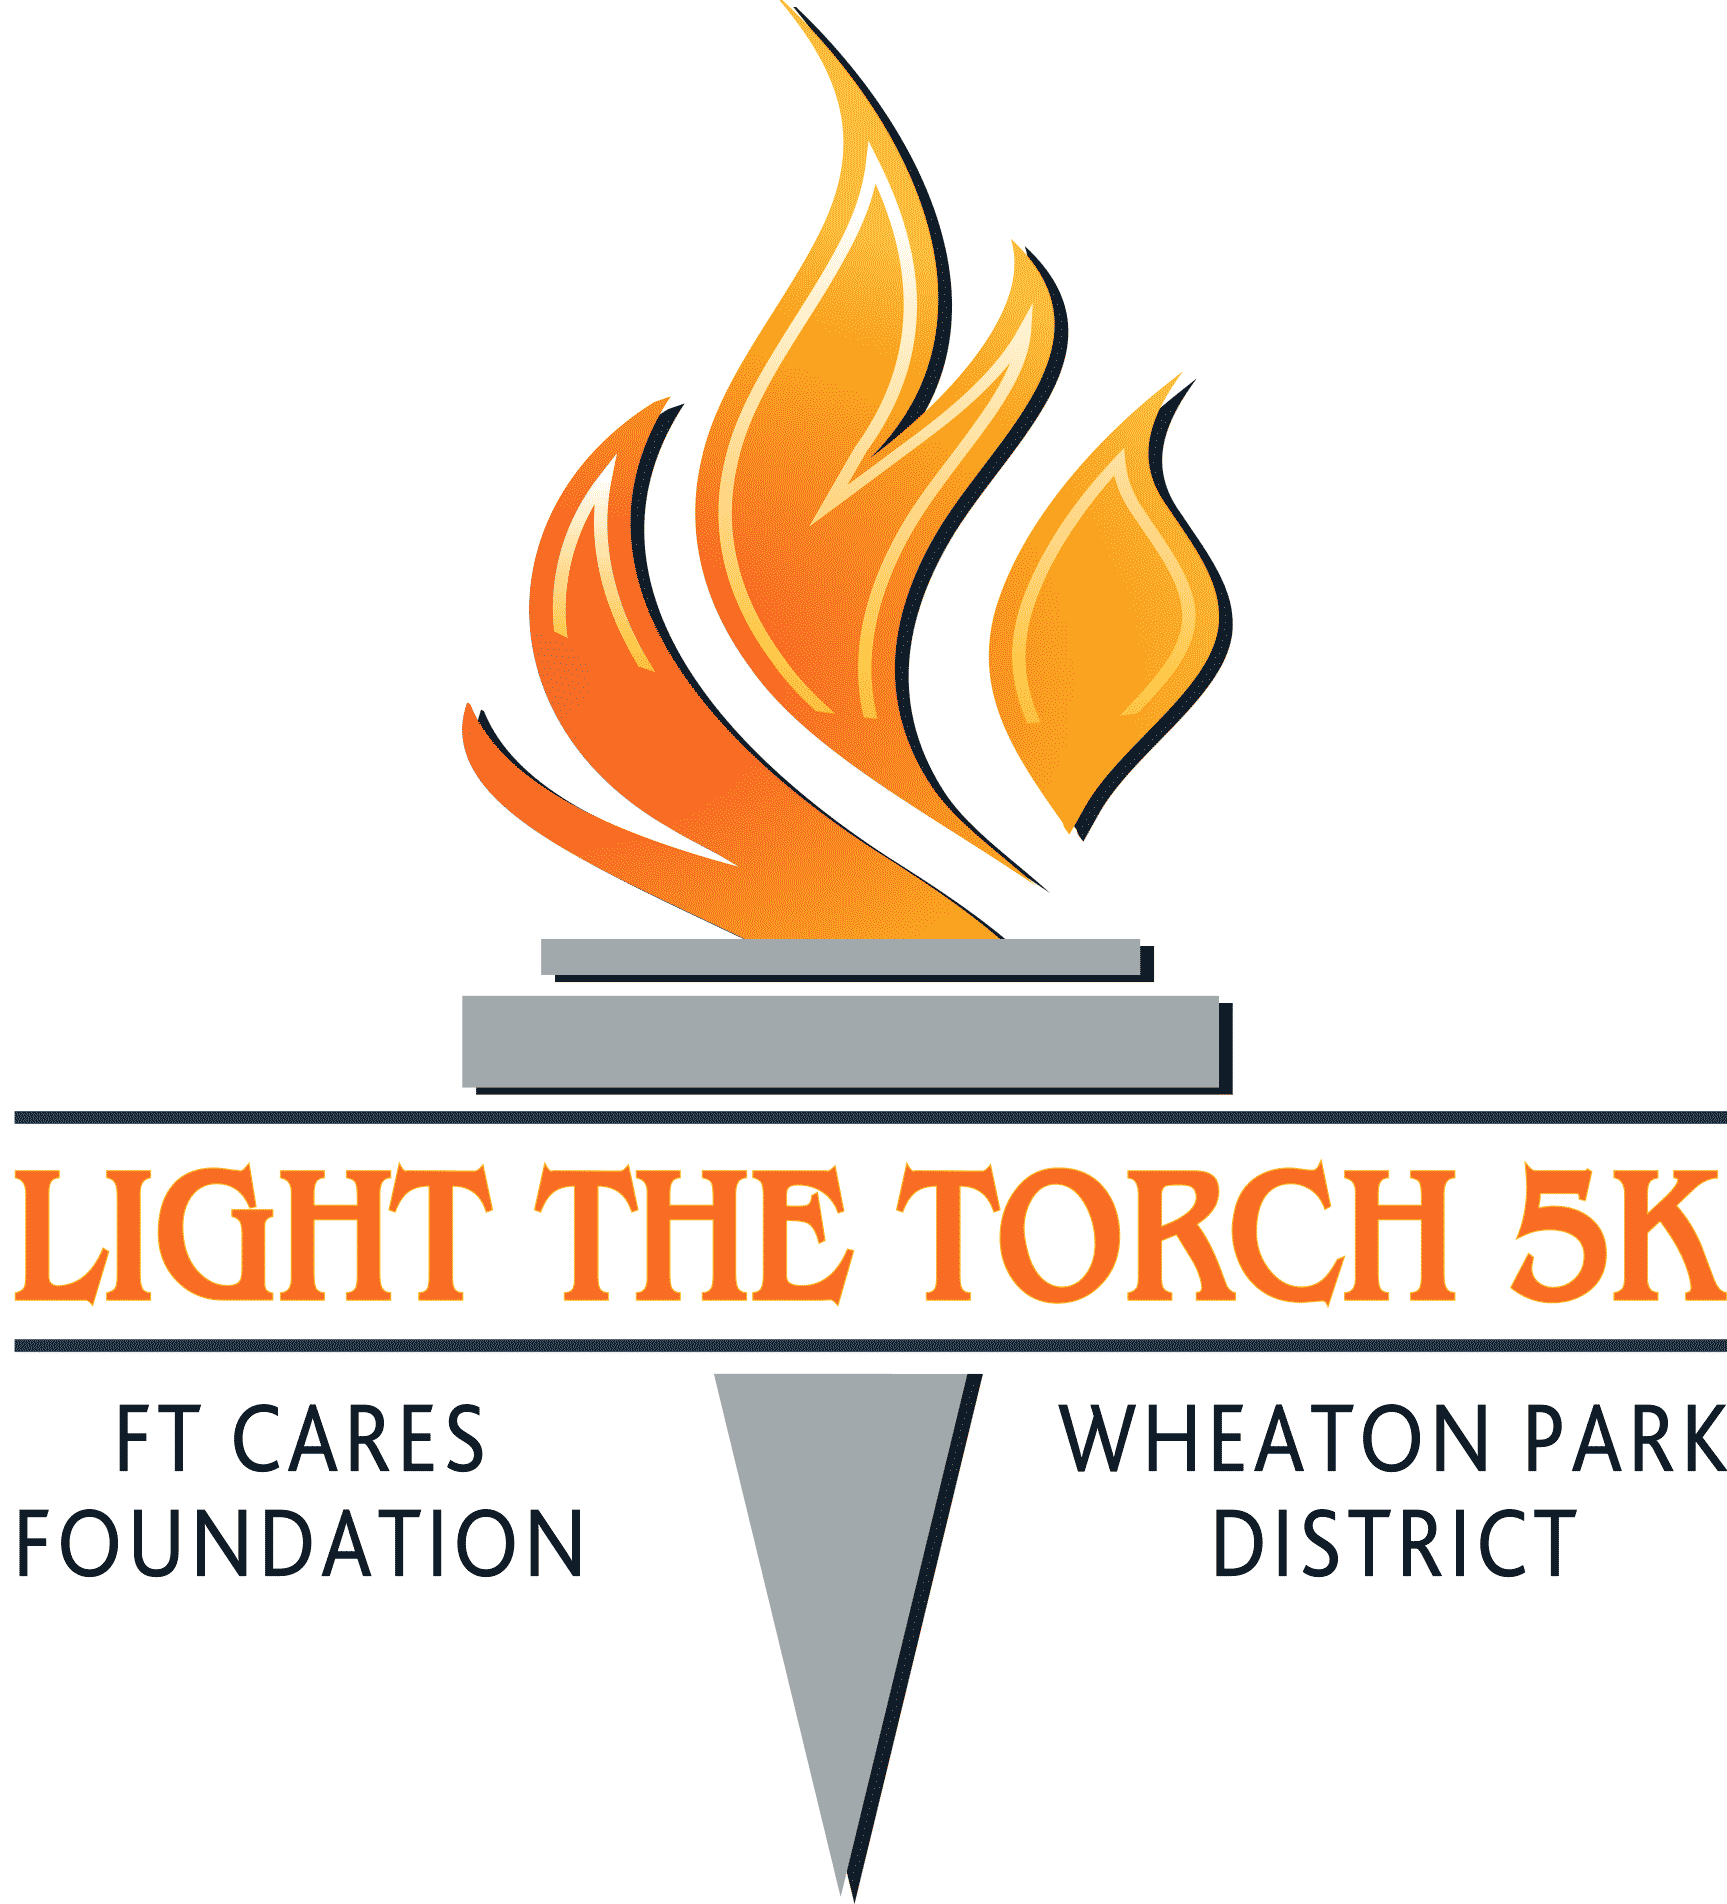 Light the Torch 5K Night Run event logo